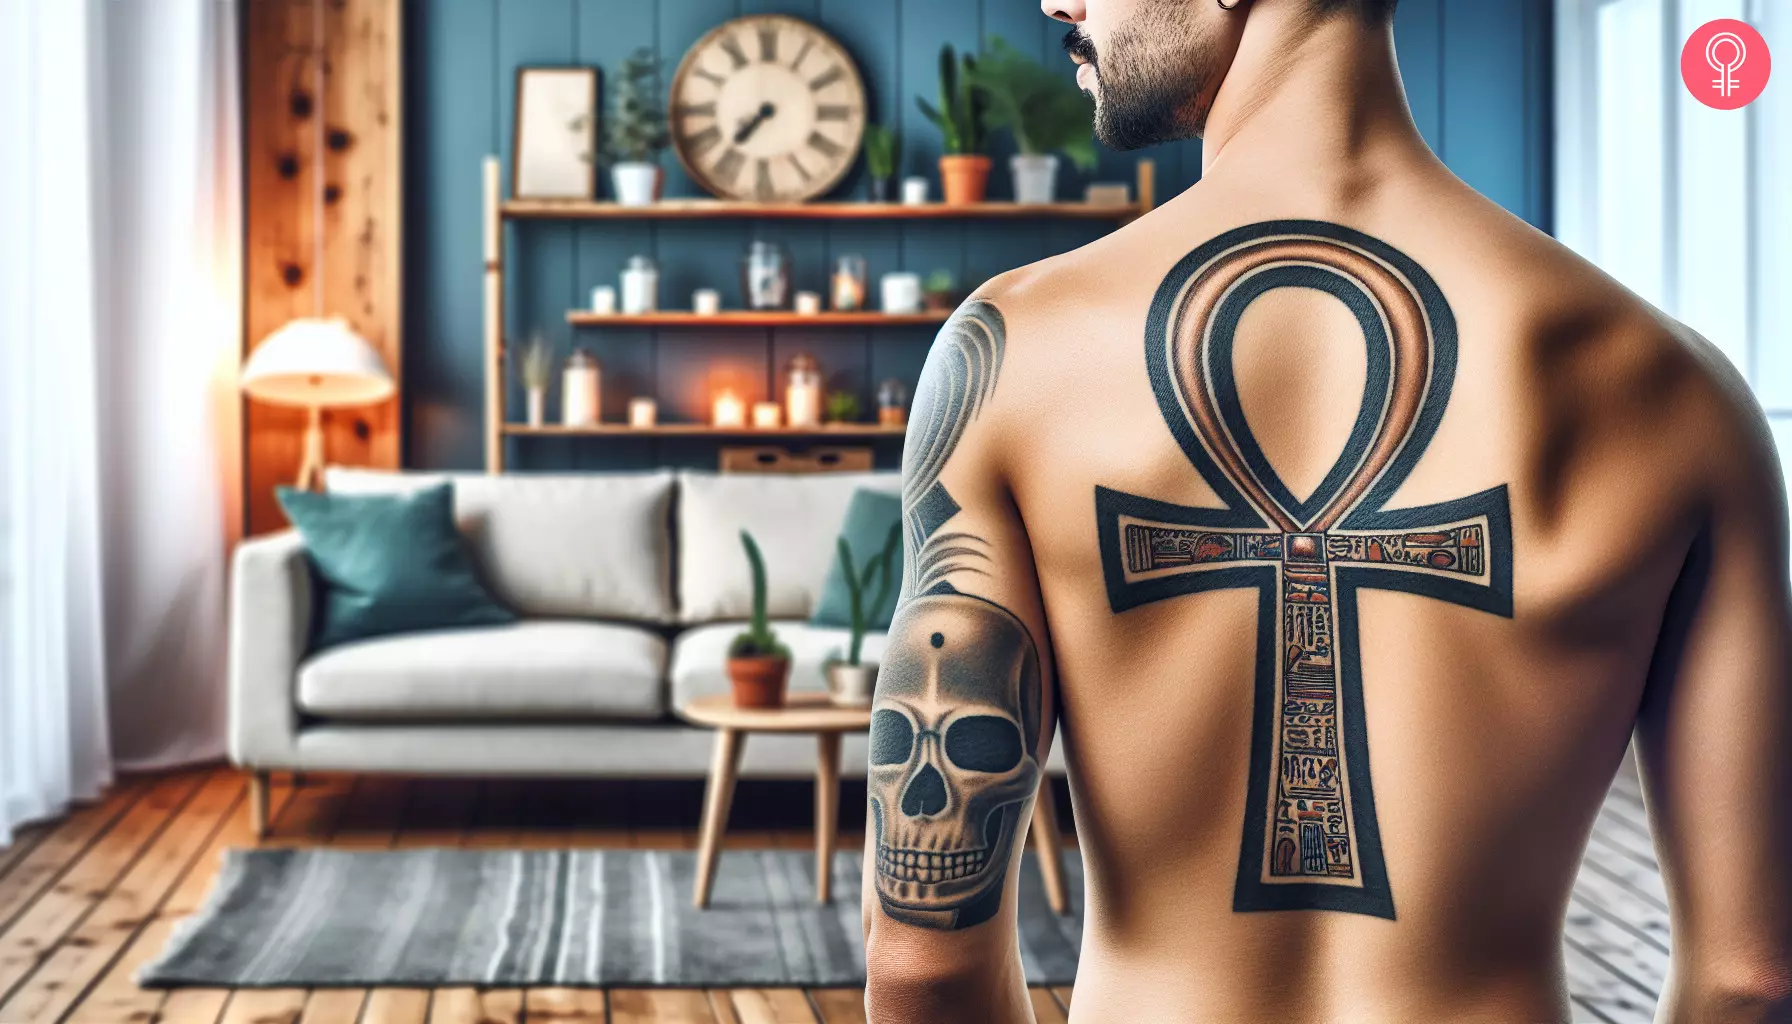 Ankh tattoo on a man’s back